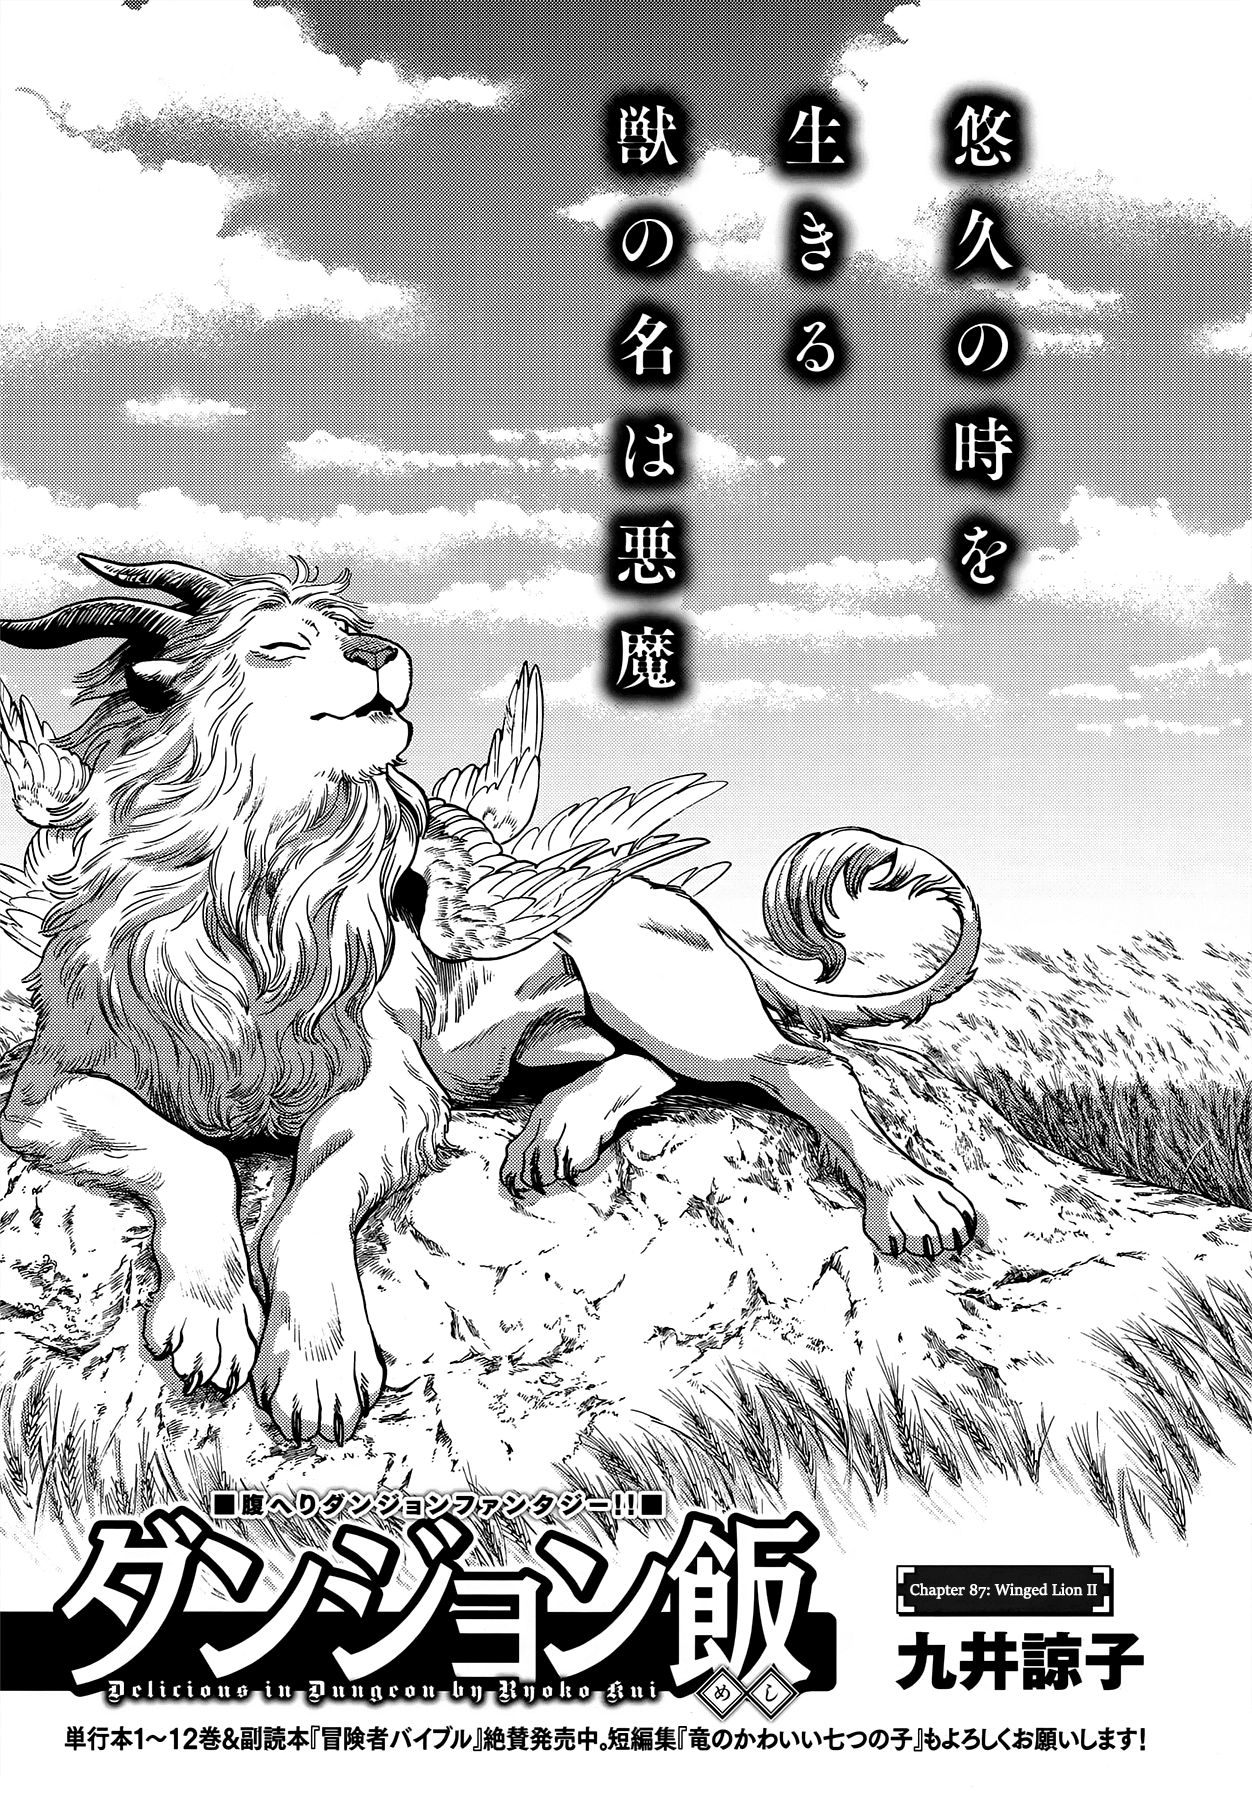 Dungeon Meshi -Chapter.87-Winged-Lion-II Image